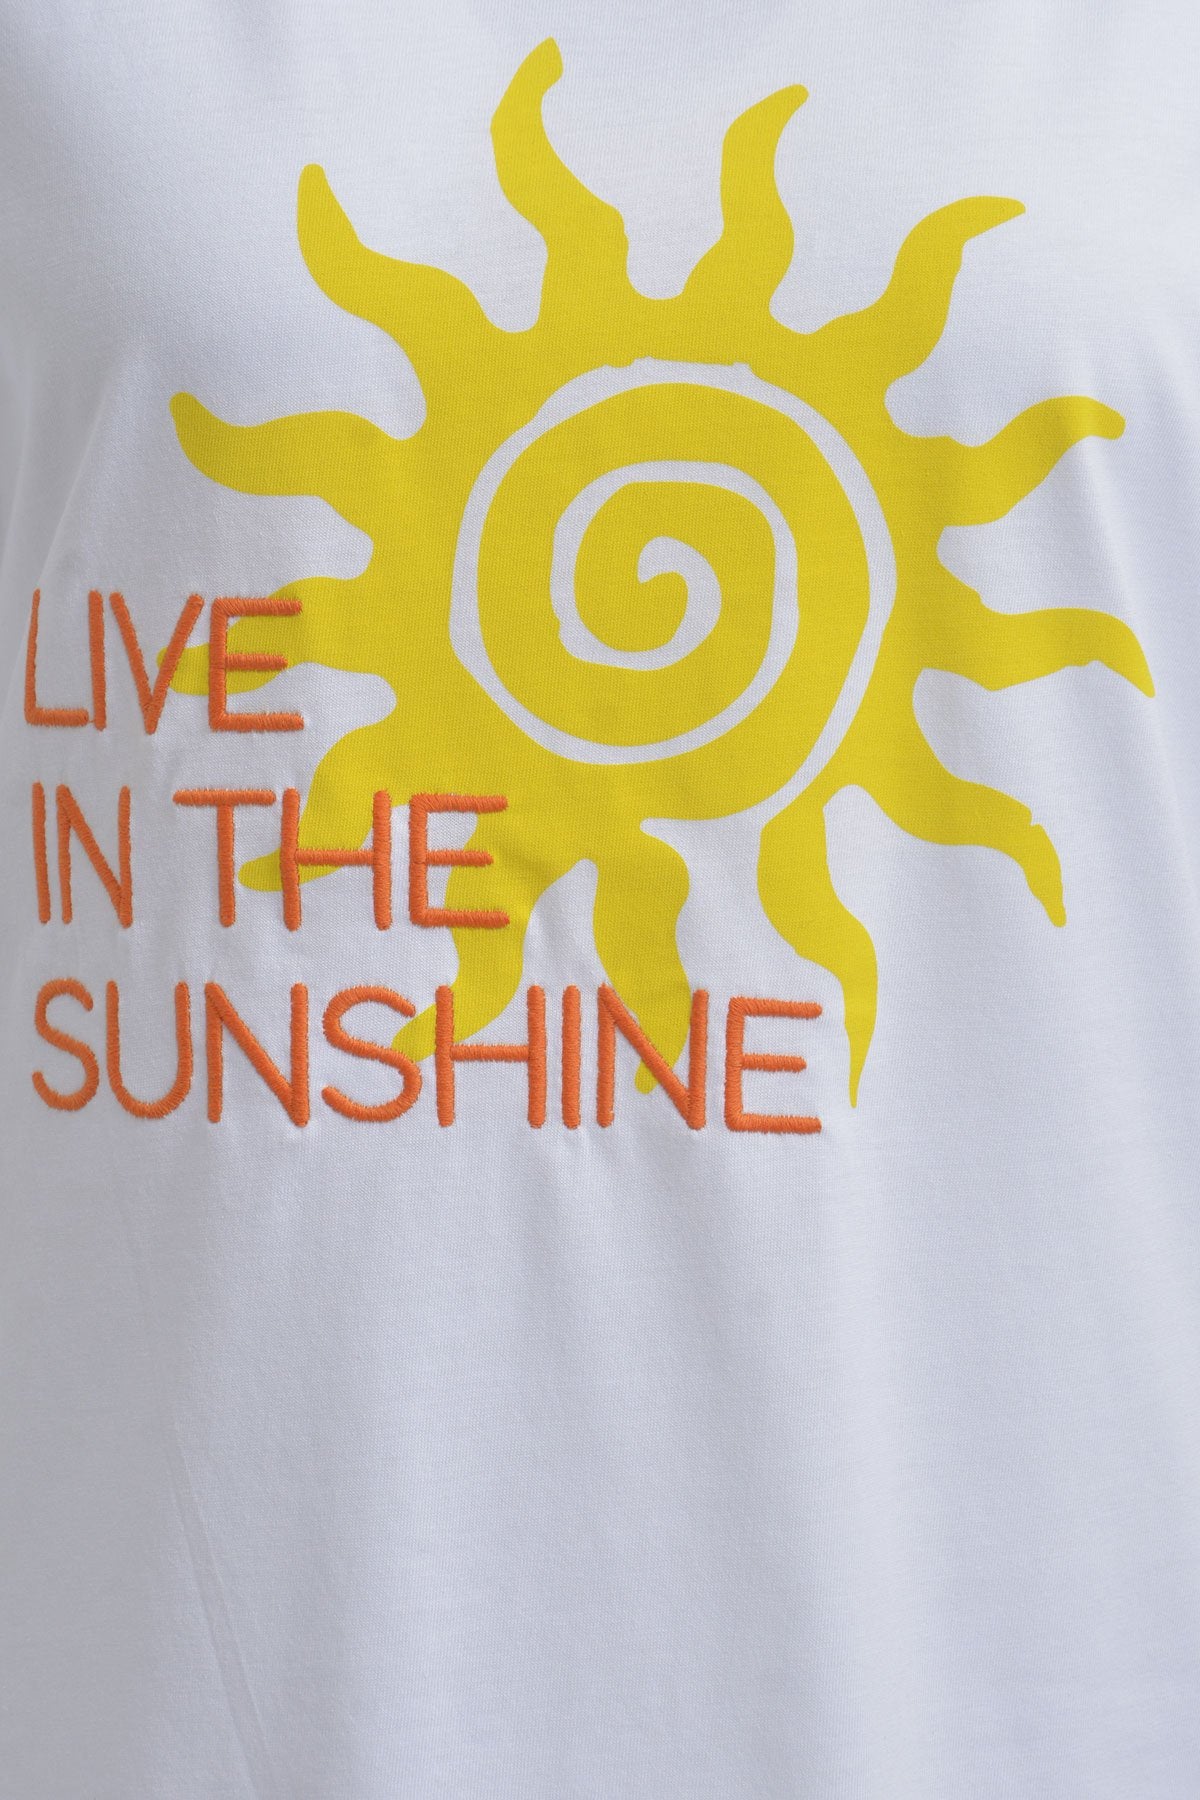 T-Shirt with Print (Sunshine Print)